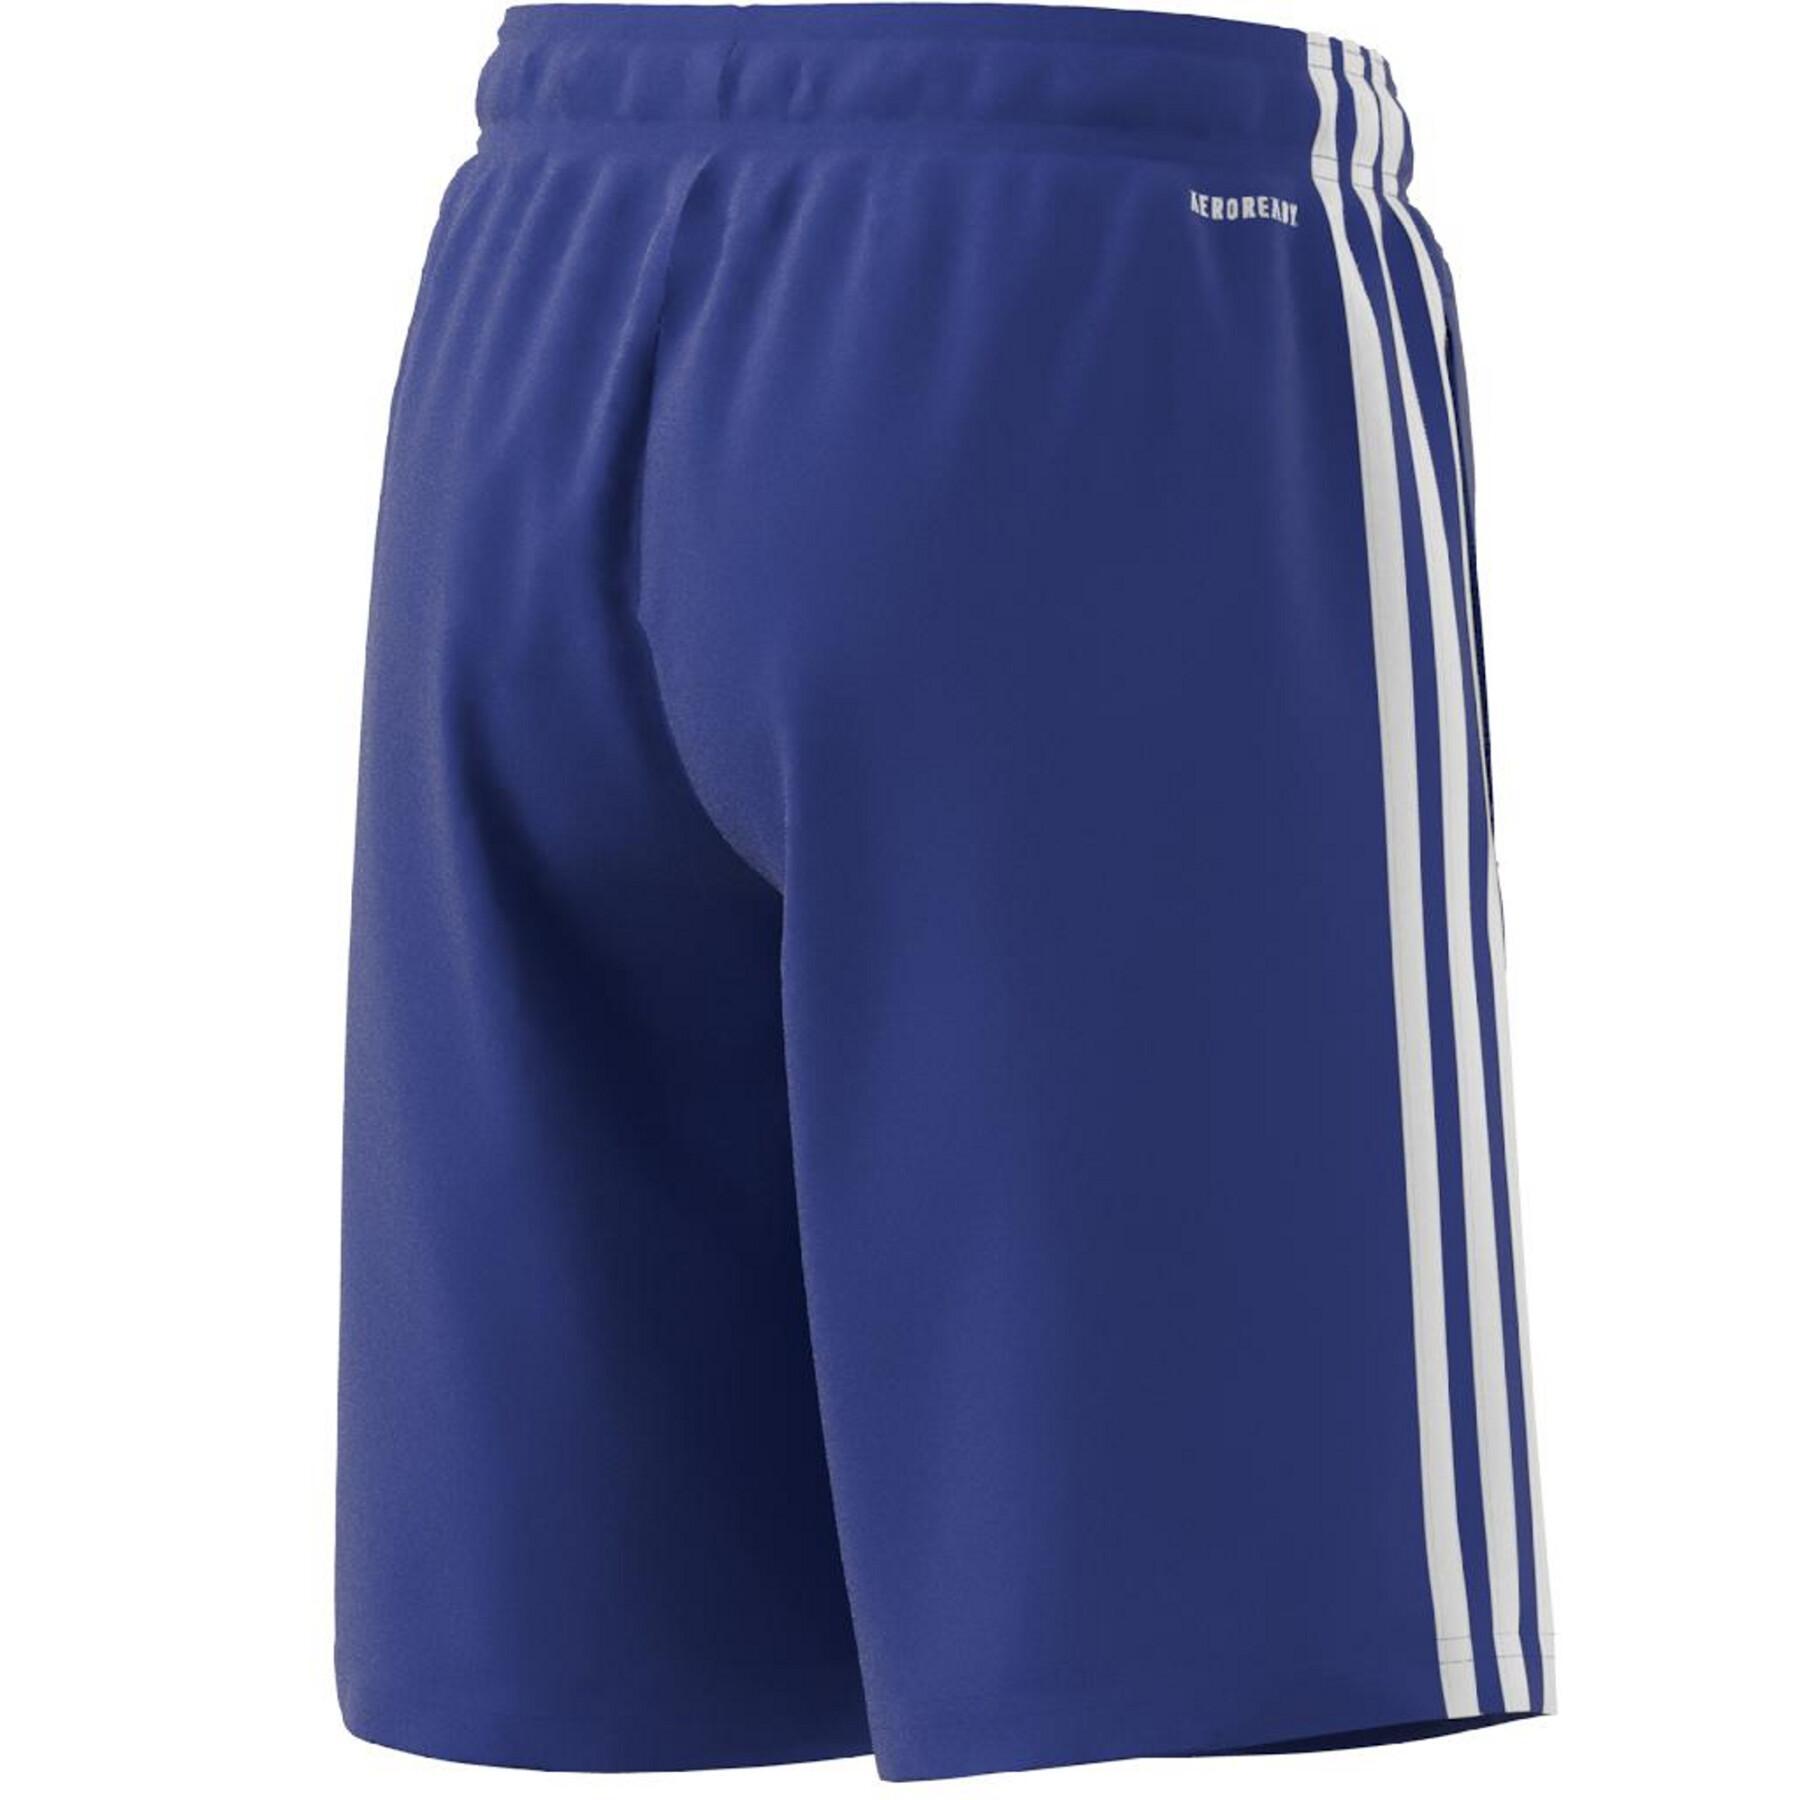 Kinder shorts adidas Essentials 3-Stripes Chelsea